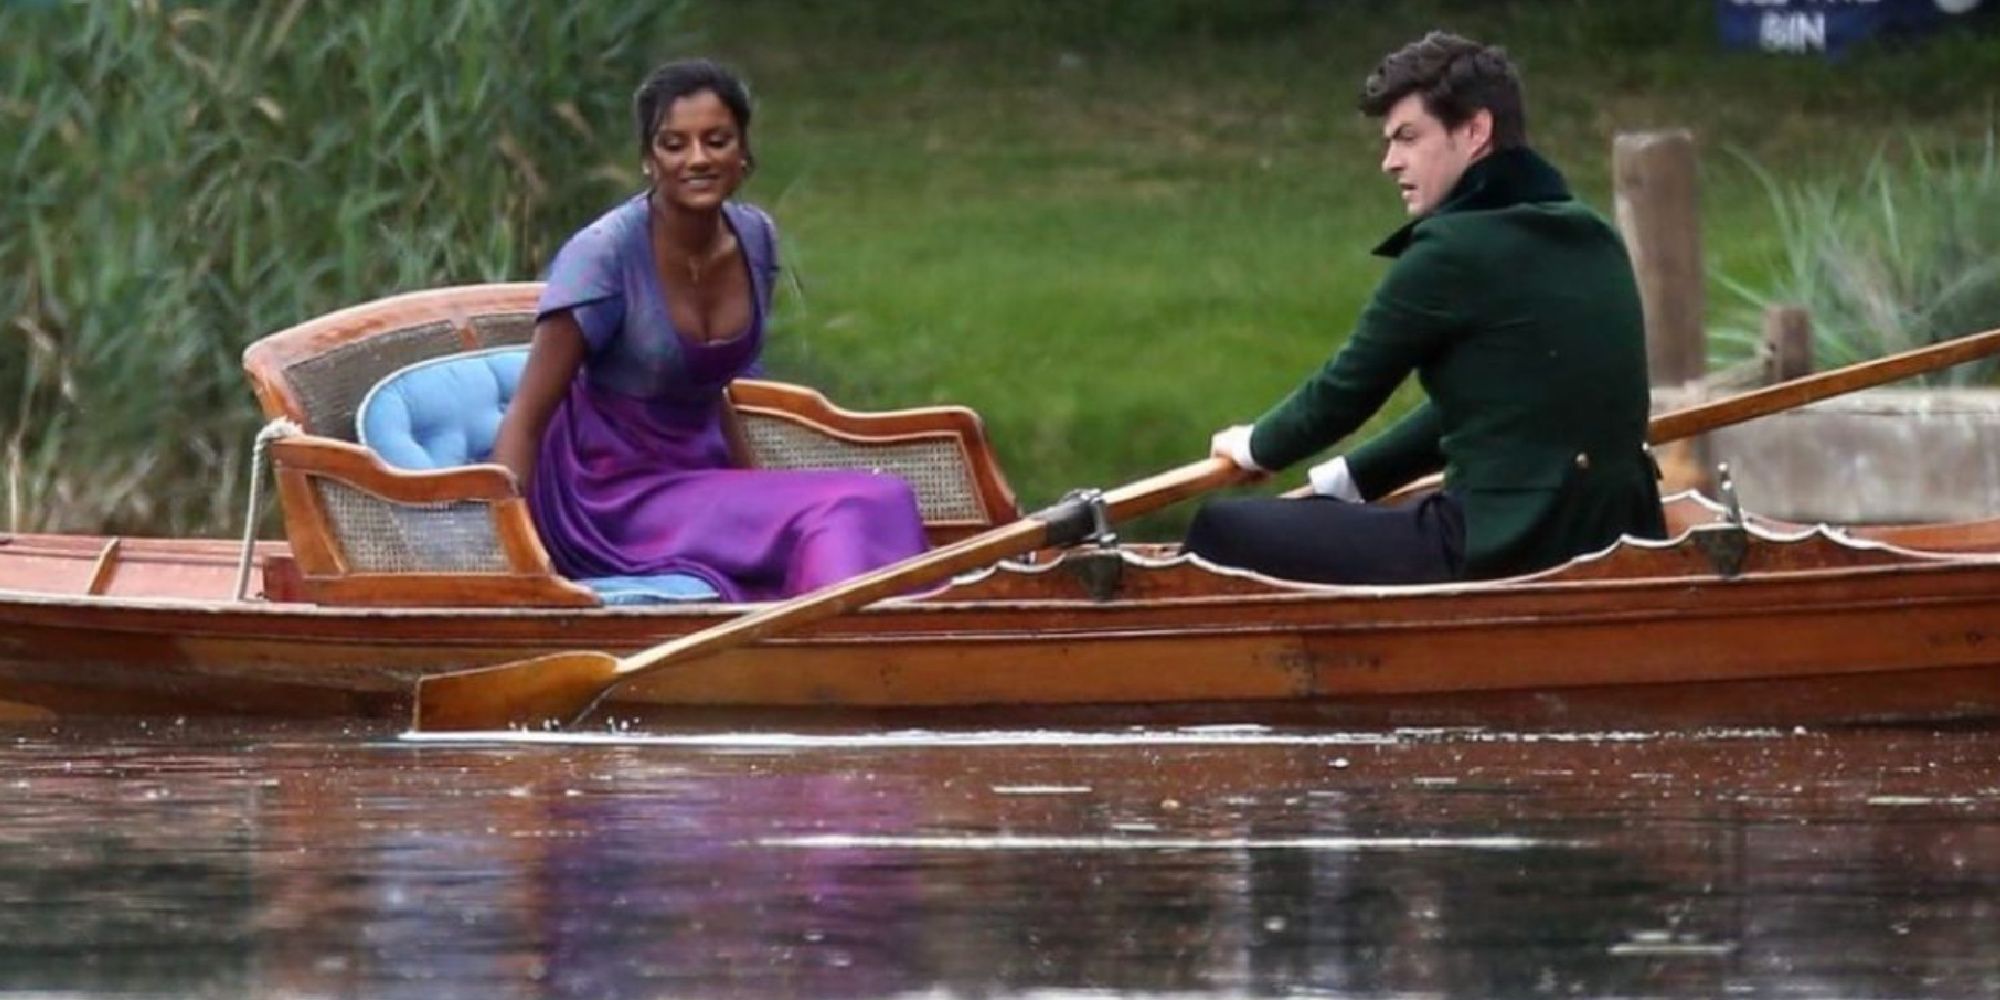 Kate and Mr. Dorset in a canoe on Bridgerton